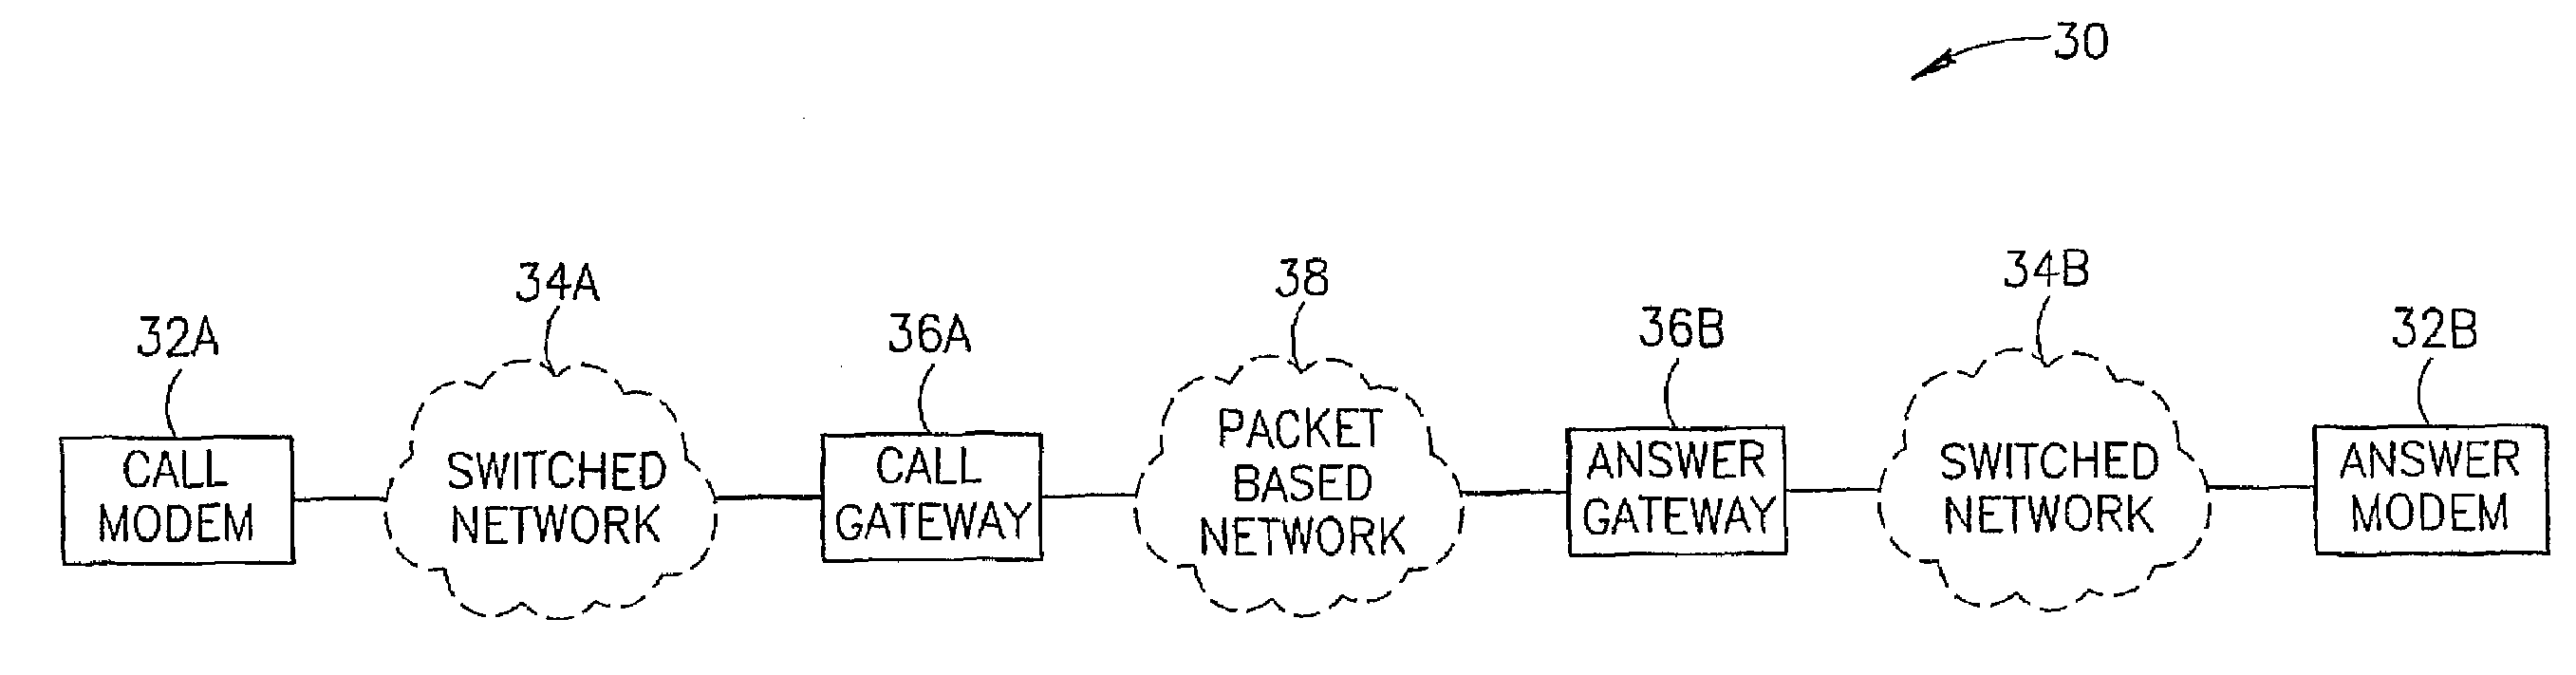 Modem relay over packet based network